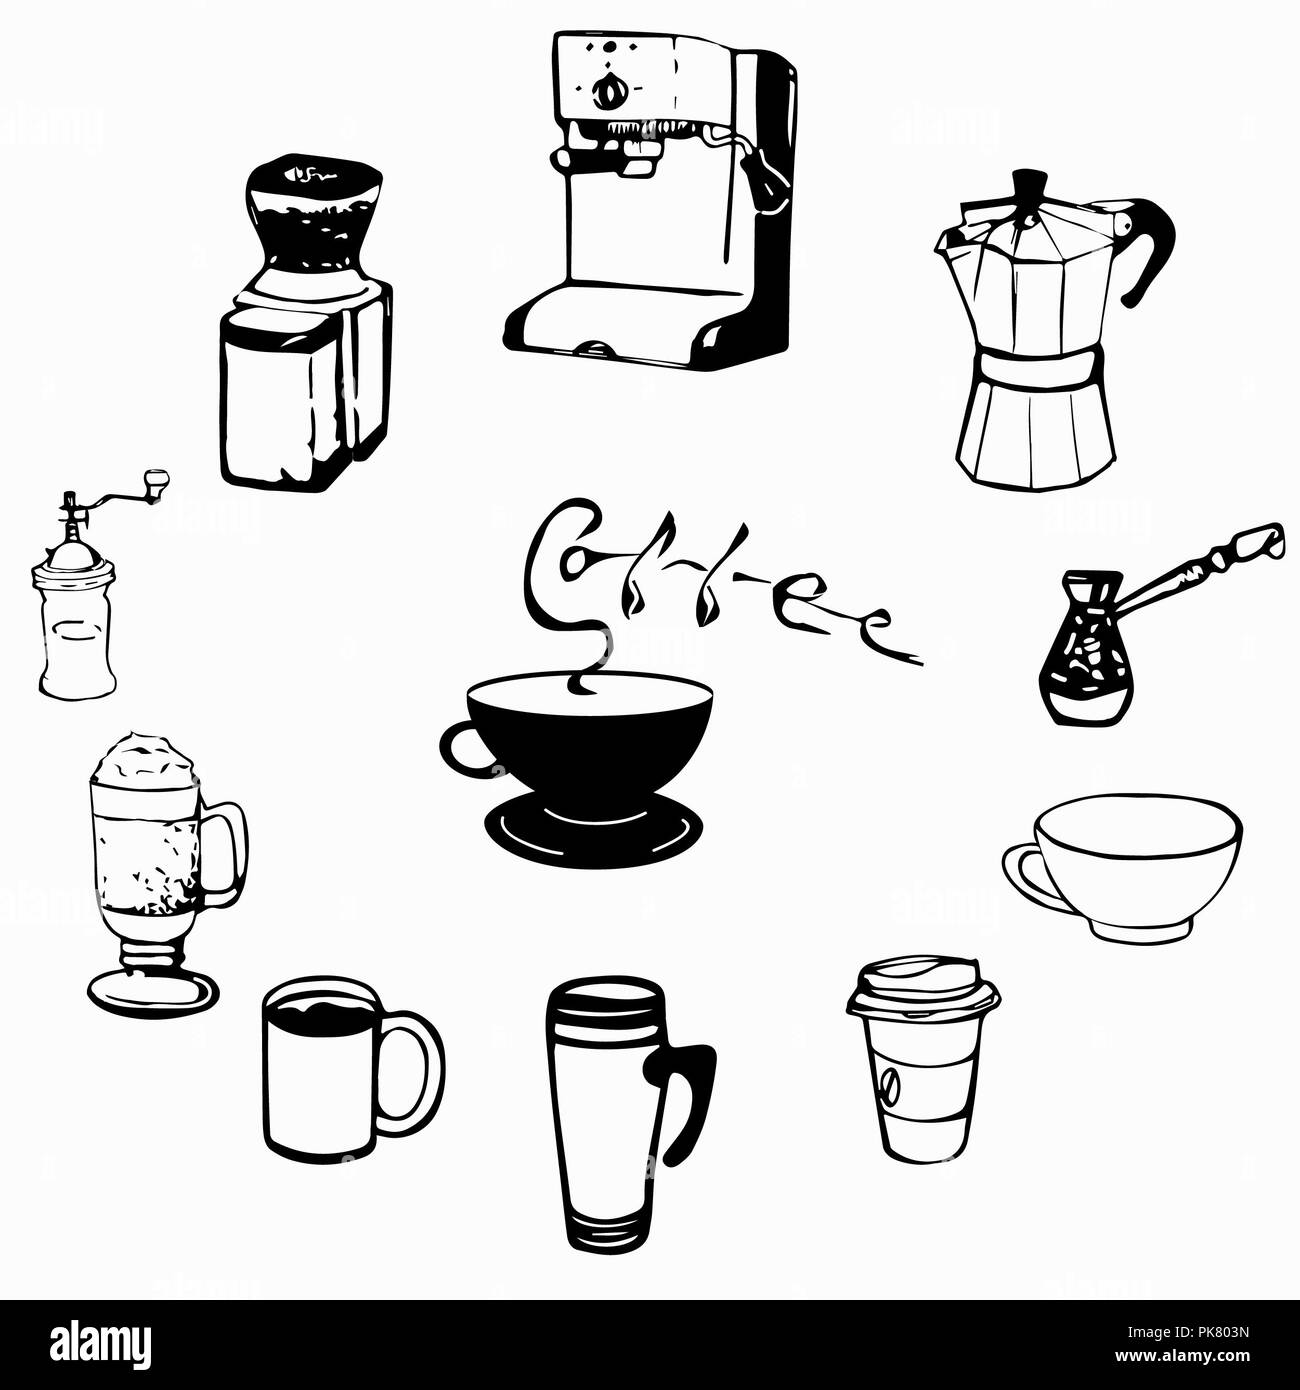 Hand drawn coffee equipment. Coffee mugs, glasses, machines hand drawn sketch. Stock Photo